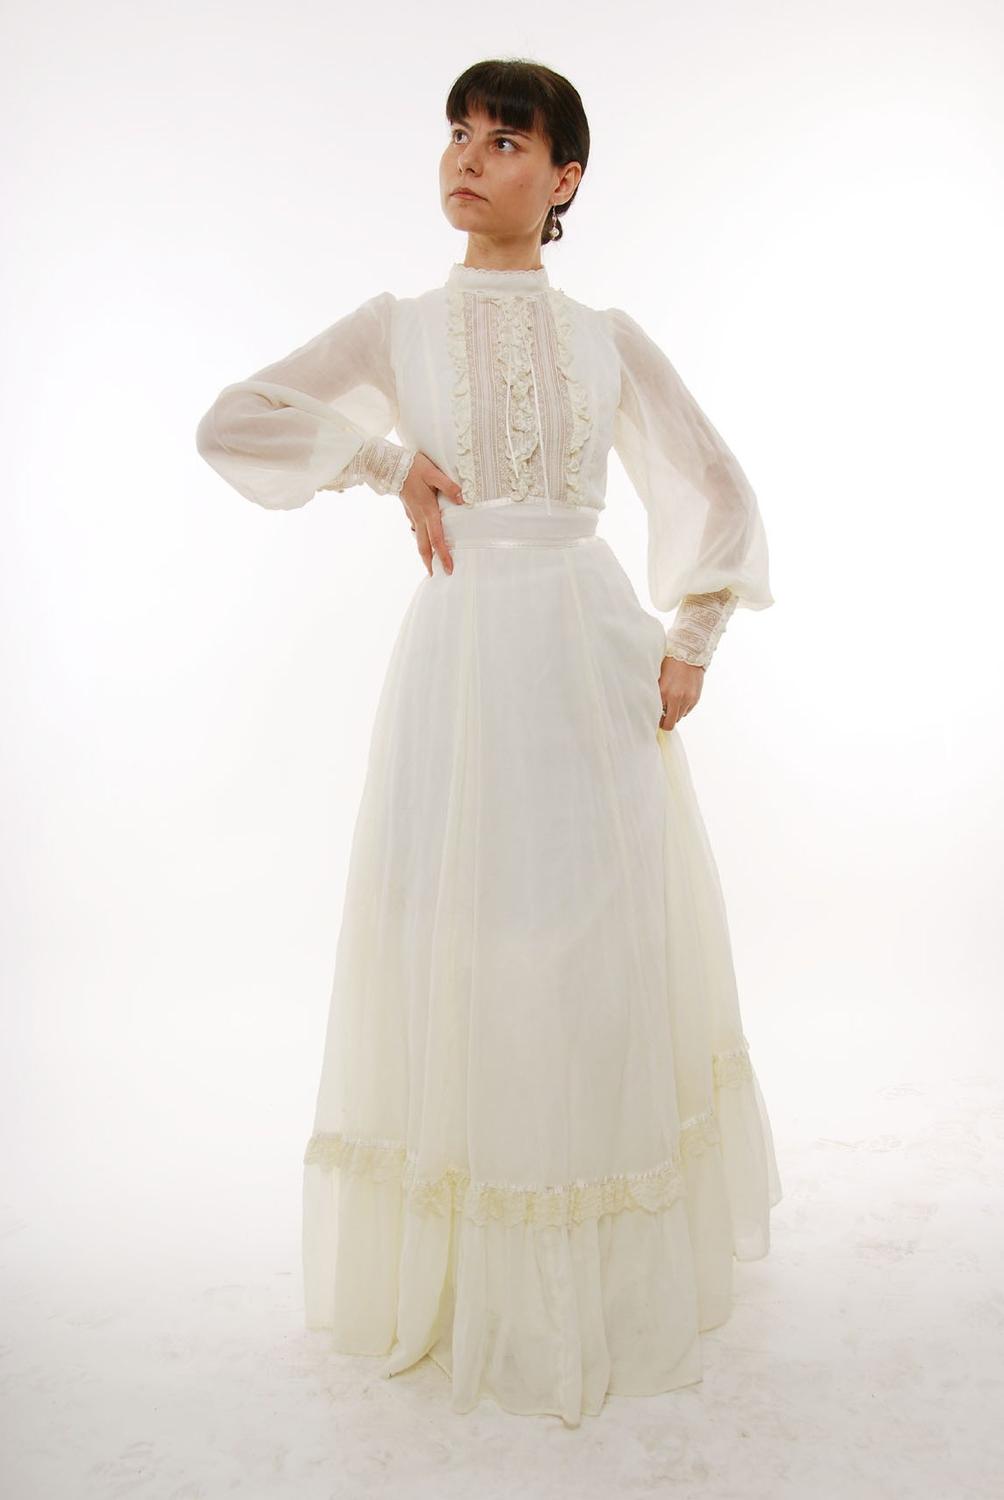 Gunne Sax Victorian Wedding dress. From VelvetIris